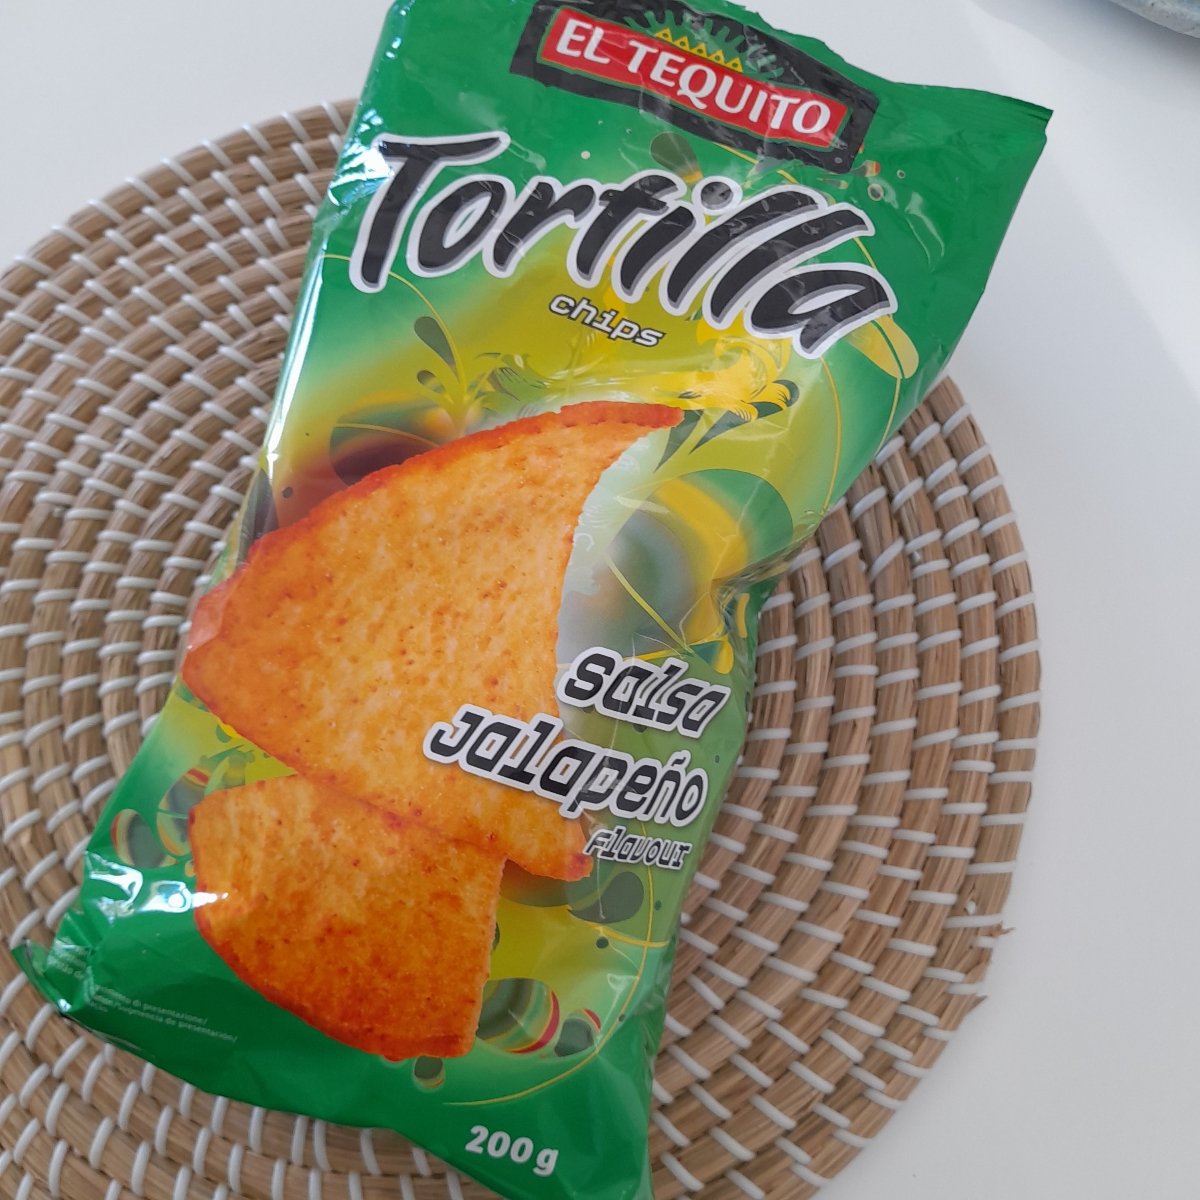 El Tequito Tortilla salsa jalapeño Reviews | abillion